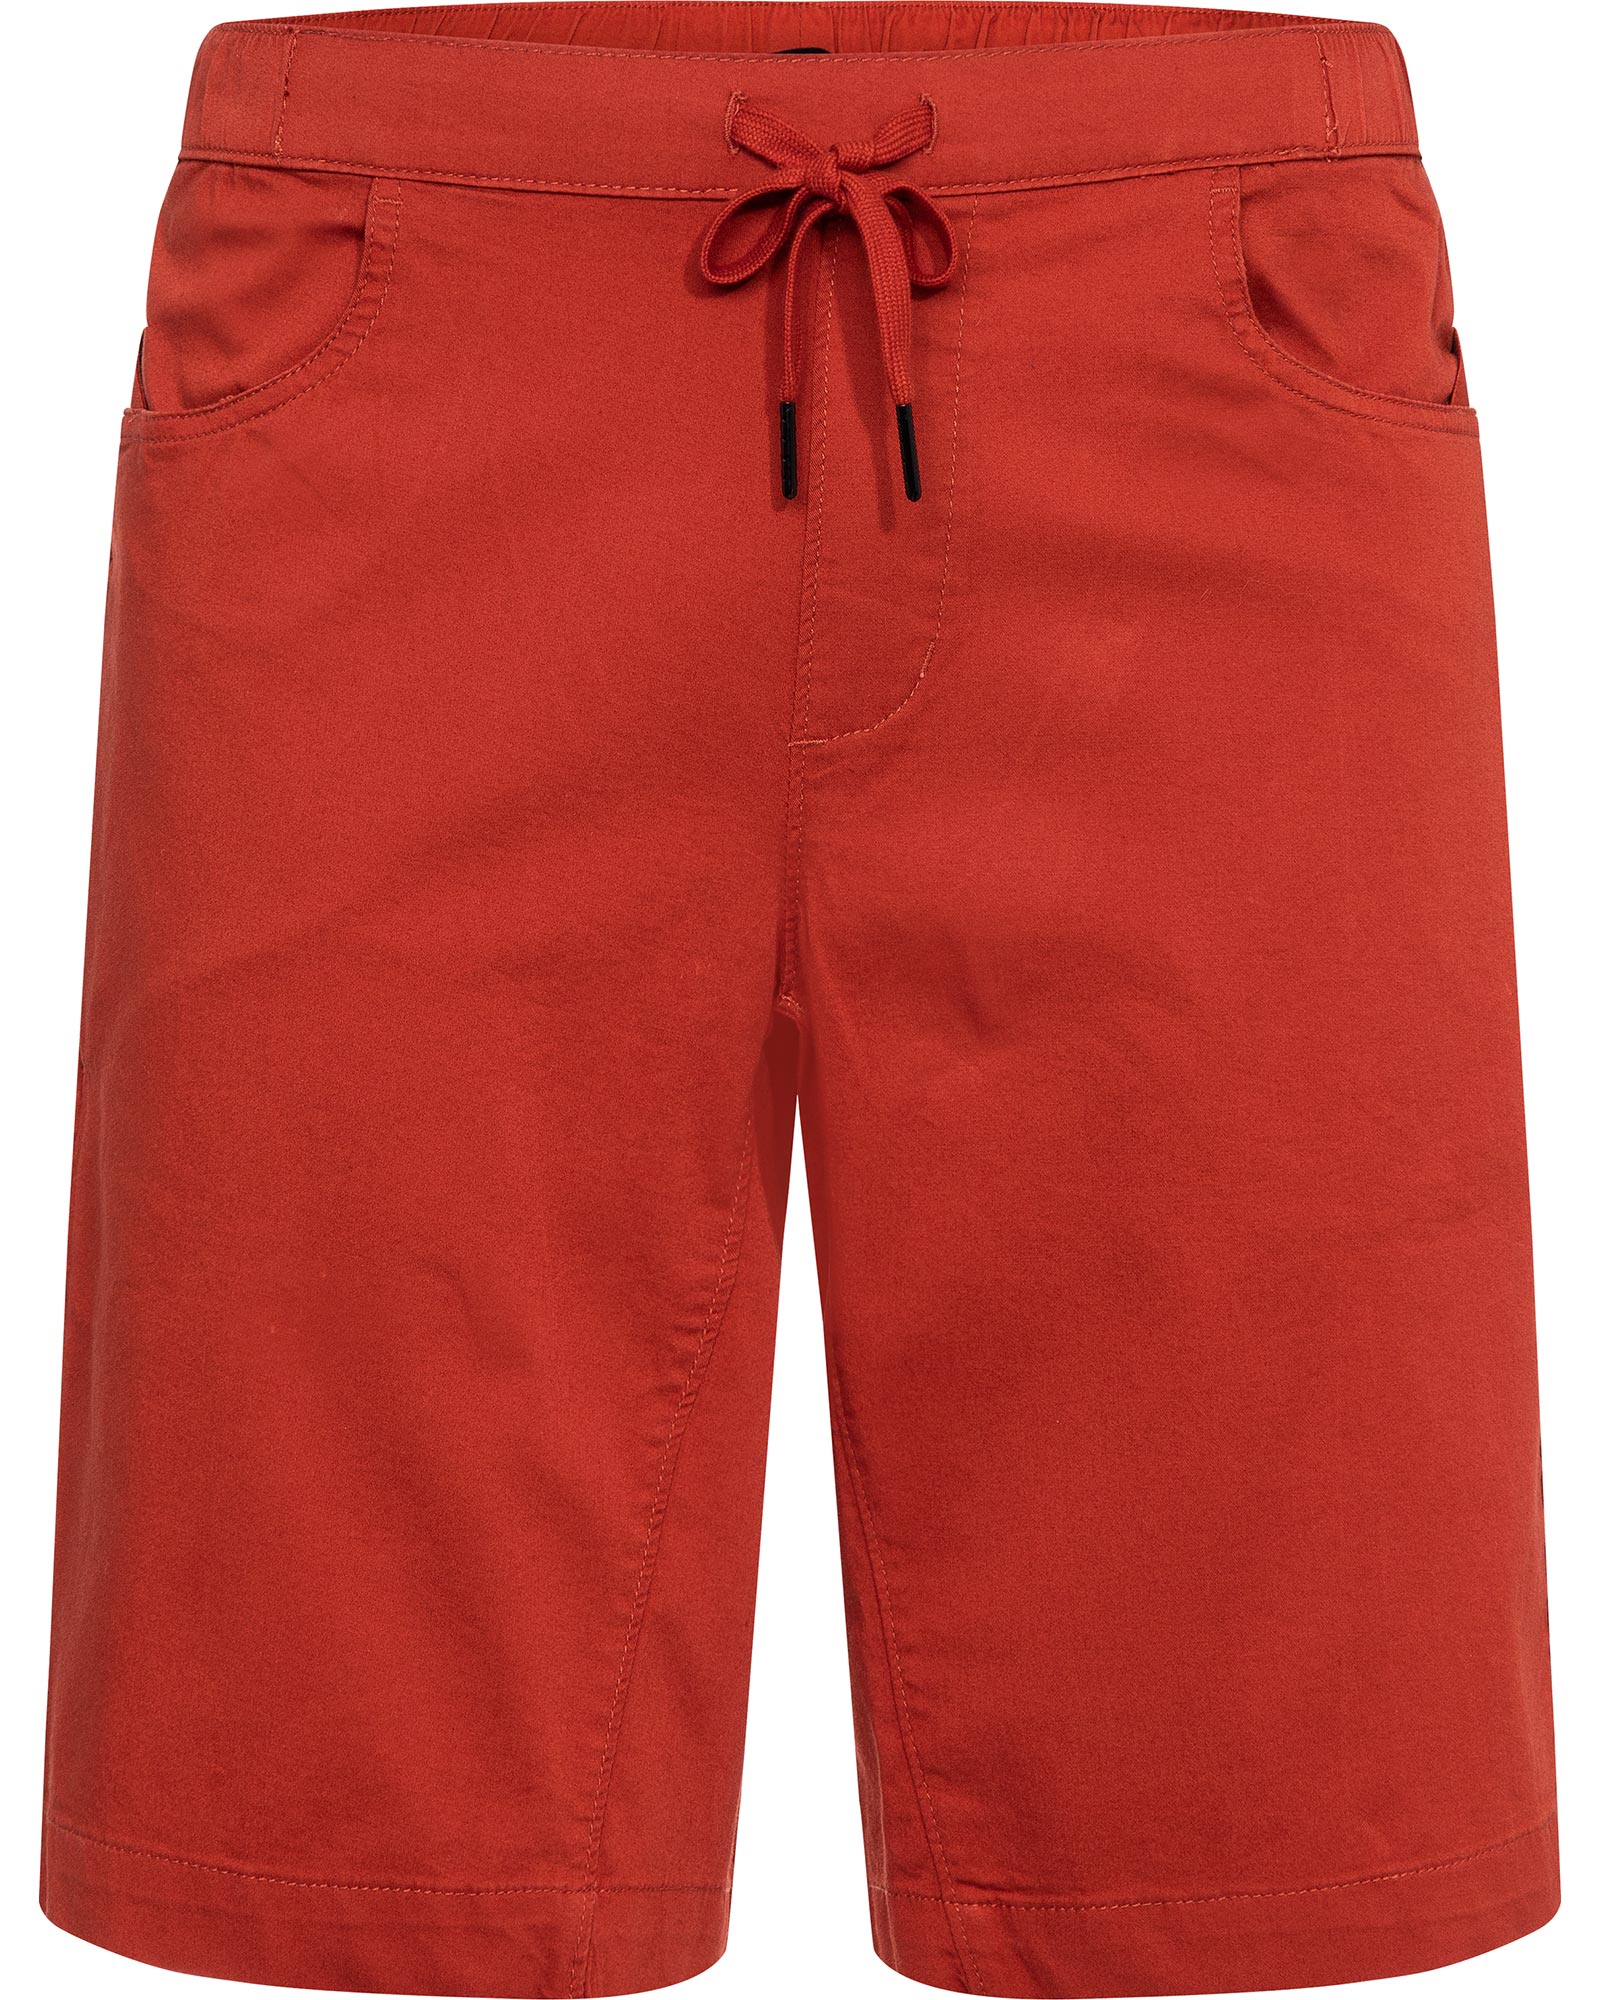 Black Diamond Notion Men’s Shorts - Red Rock XL